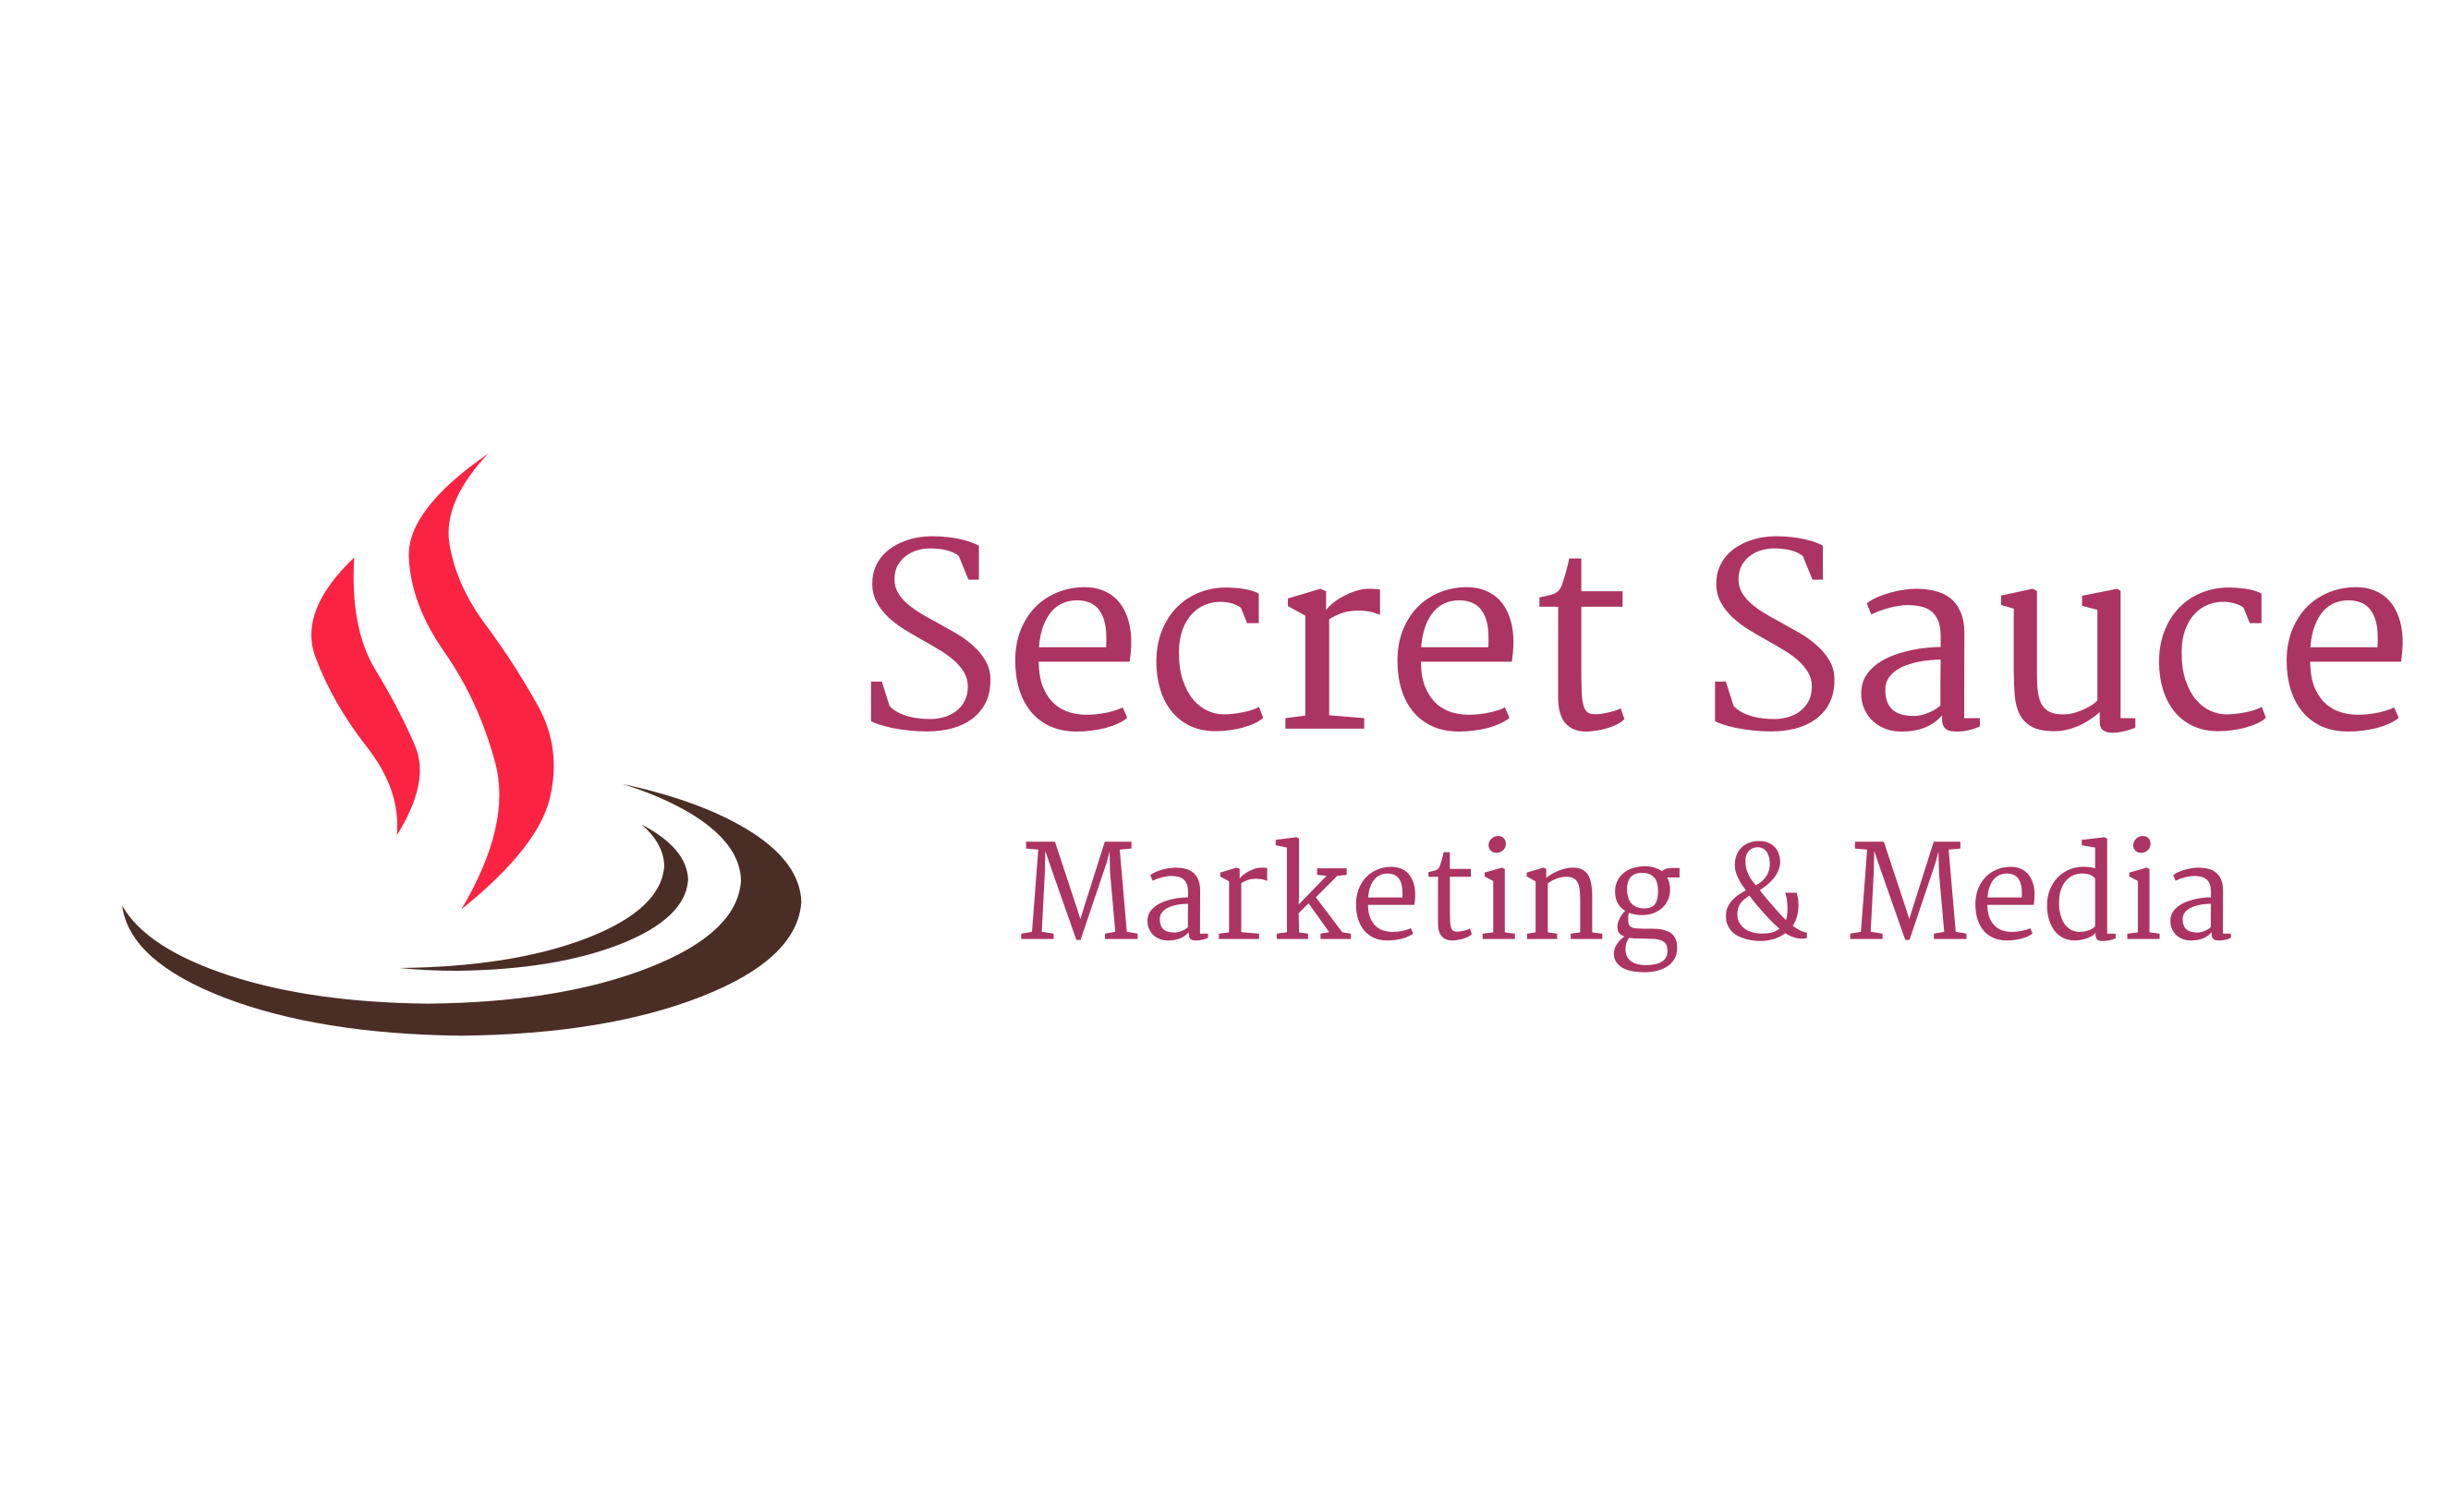 Secret Sauce Marketing & Media